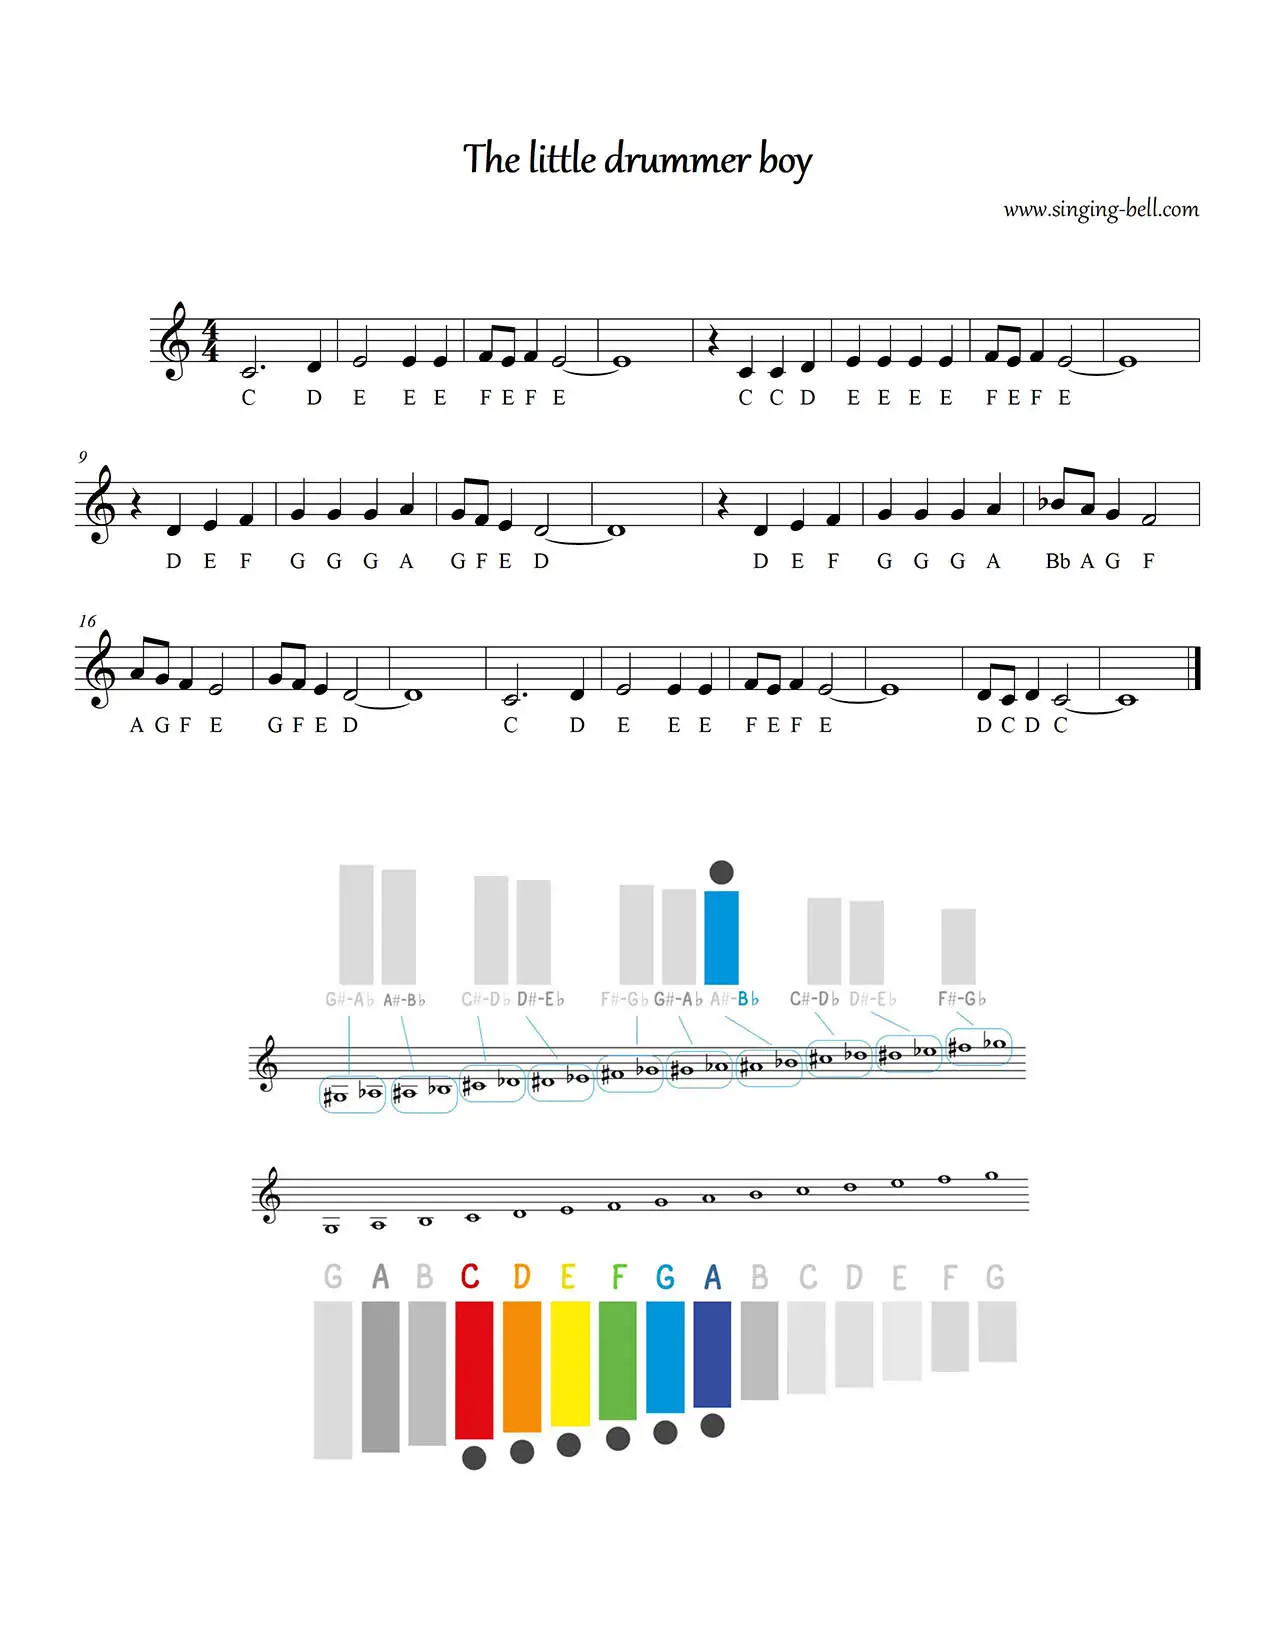 The Little Drummer Boy free glockenspiel sheet music notes pdf